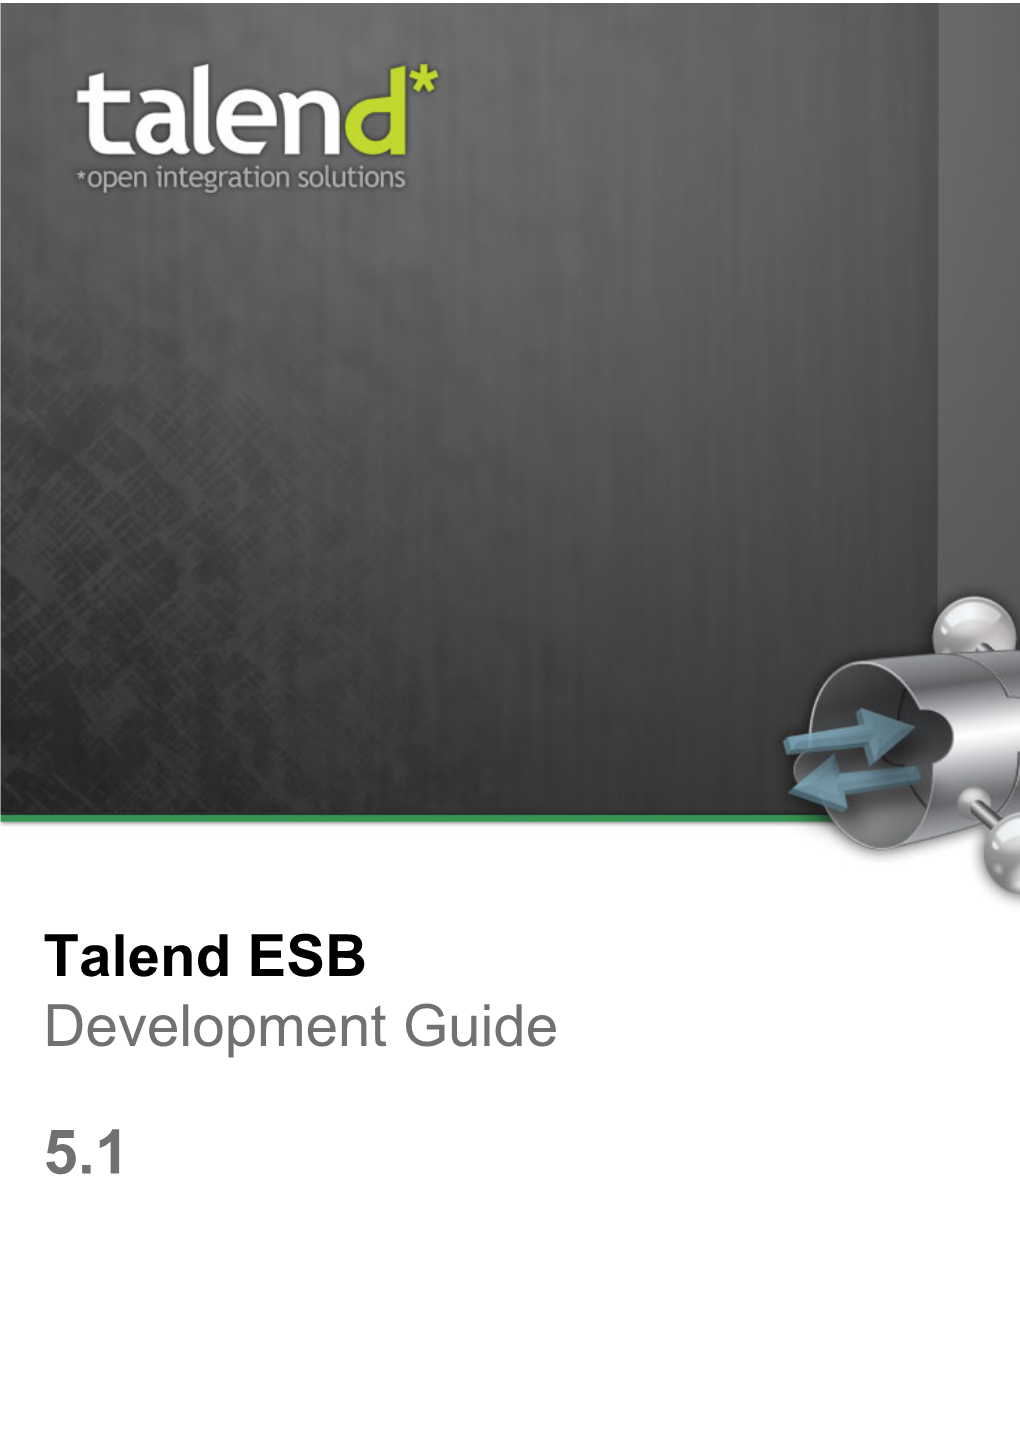 Talend ESB Development Guide